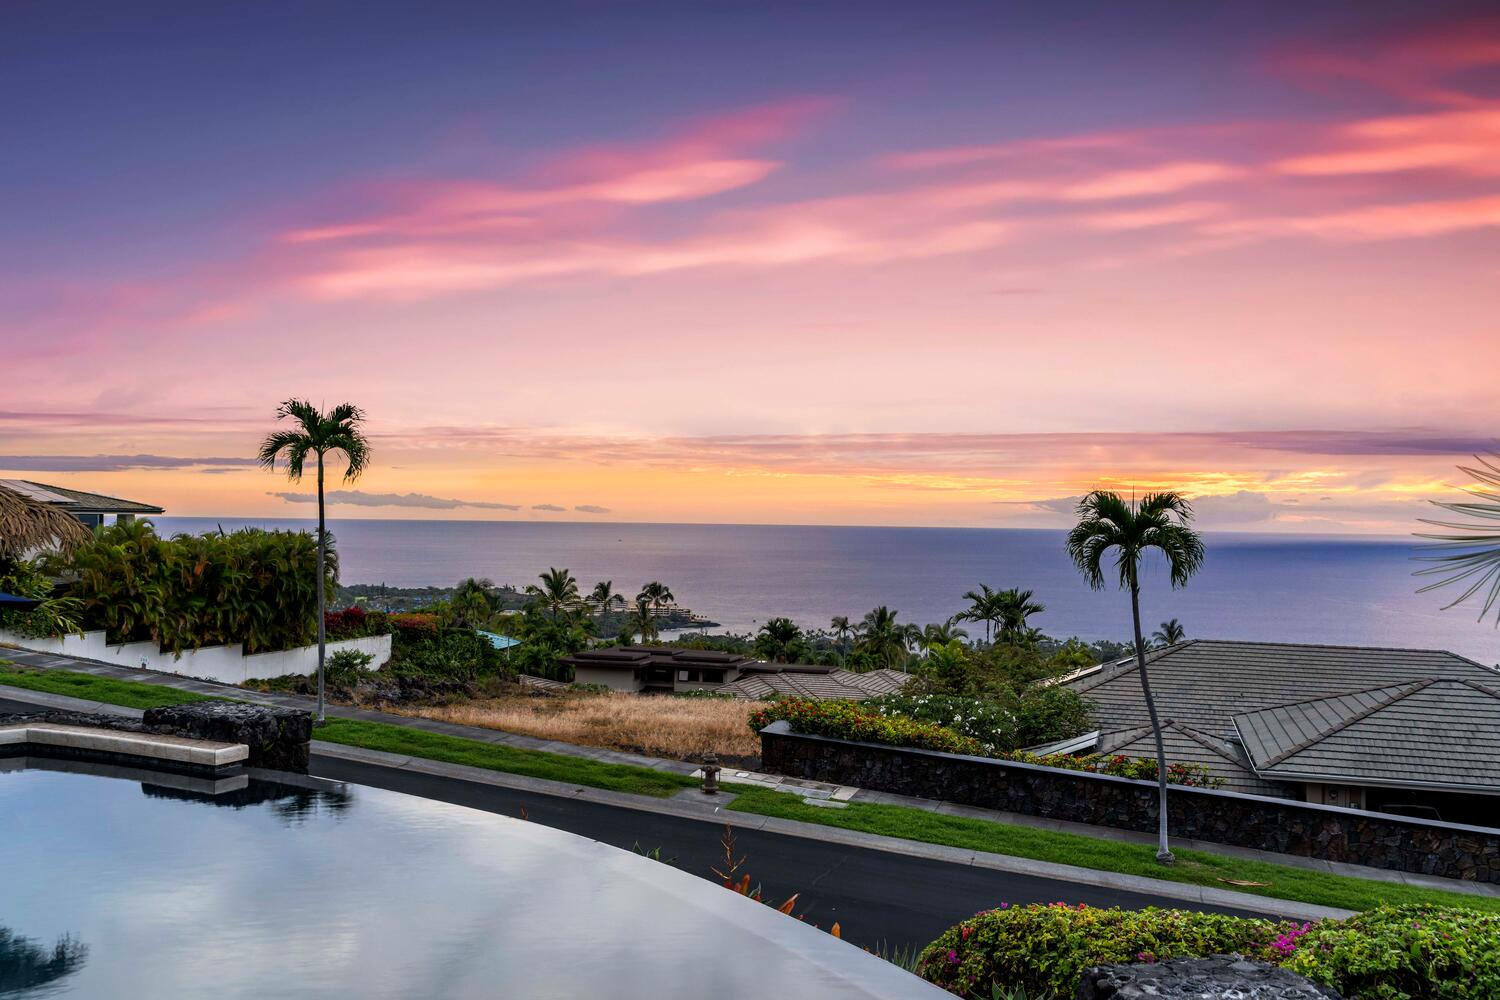 Kailua Kona Vacation Rentals, Island Oasis - Beautiful sunset views